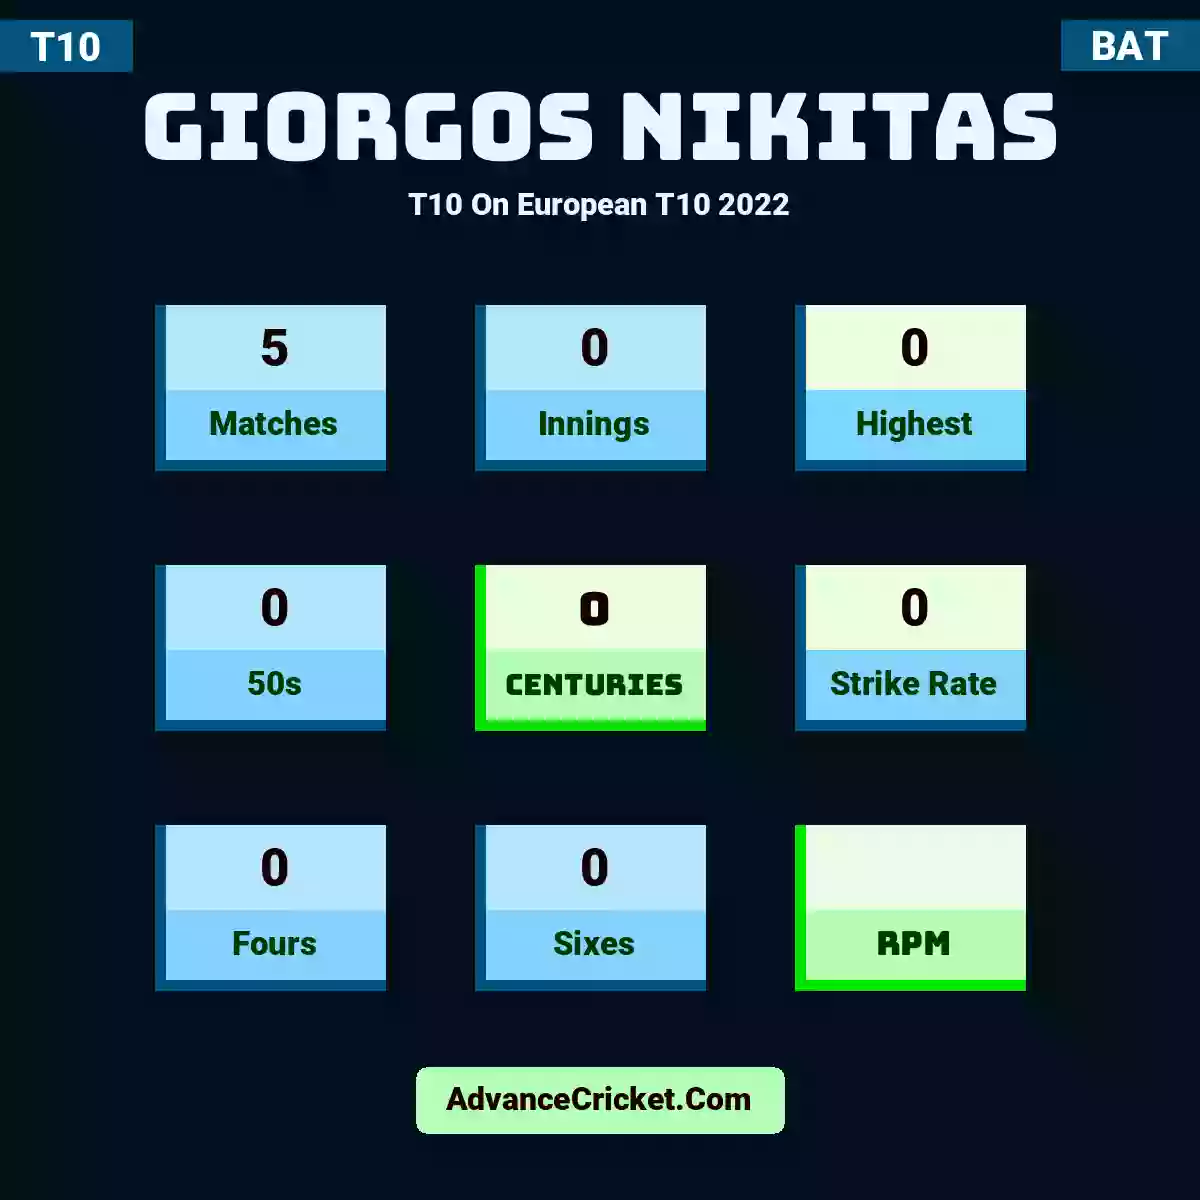 Giorgos Nikitas T10  On European T10 2022, Giorgos Nikitas played 5 matches, scored 0 runs as highest, 0 half-centuries, and 0 centuries, with a strike rate of 0. G.Nikitas hit 0 fours and 0 sixes.